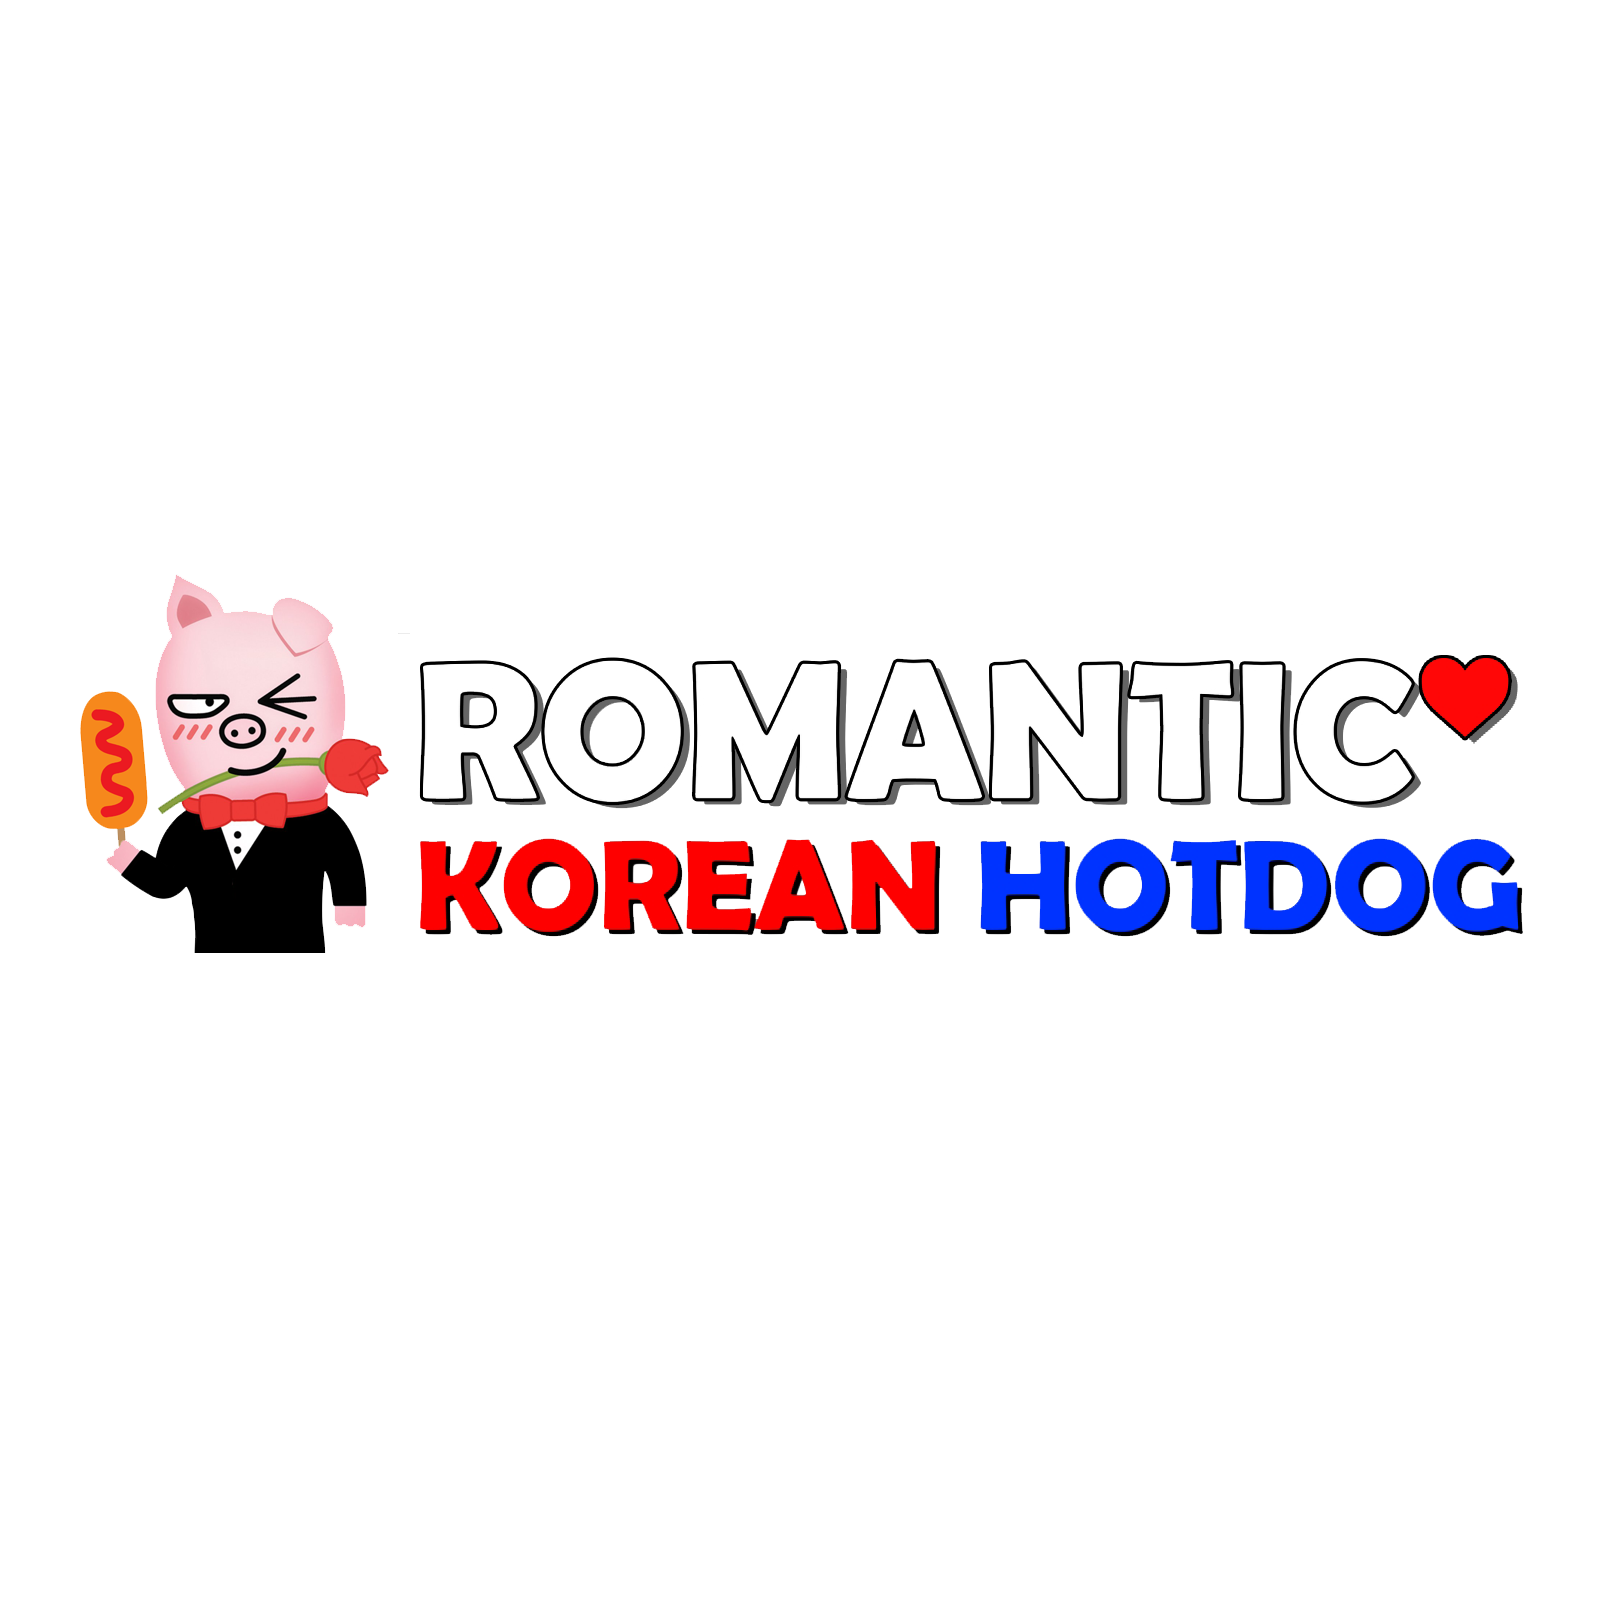 ROMANTIC KOREAN HOTDOG